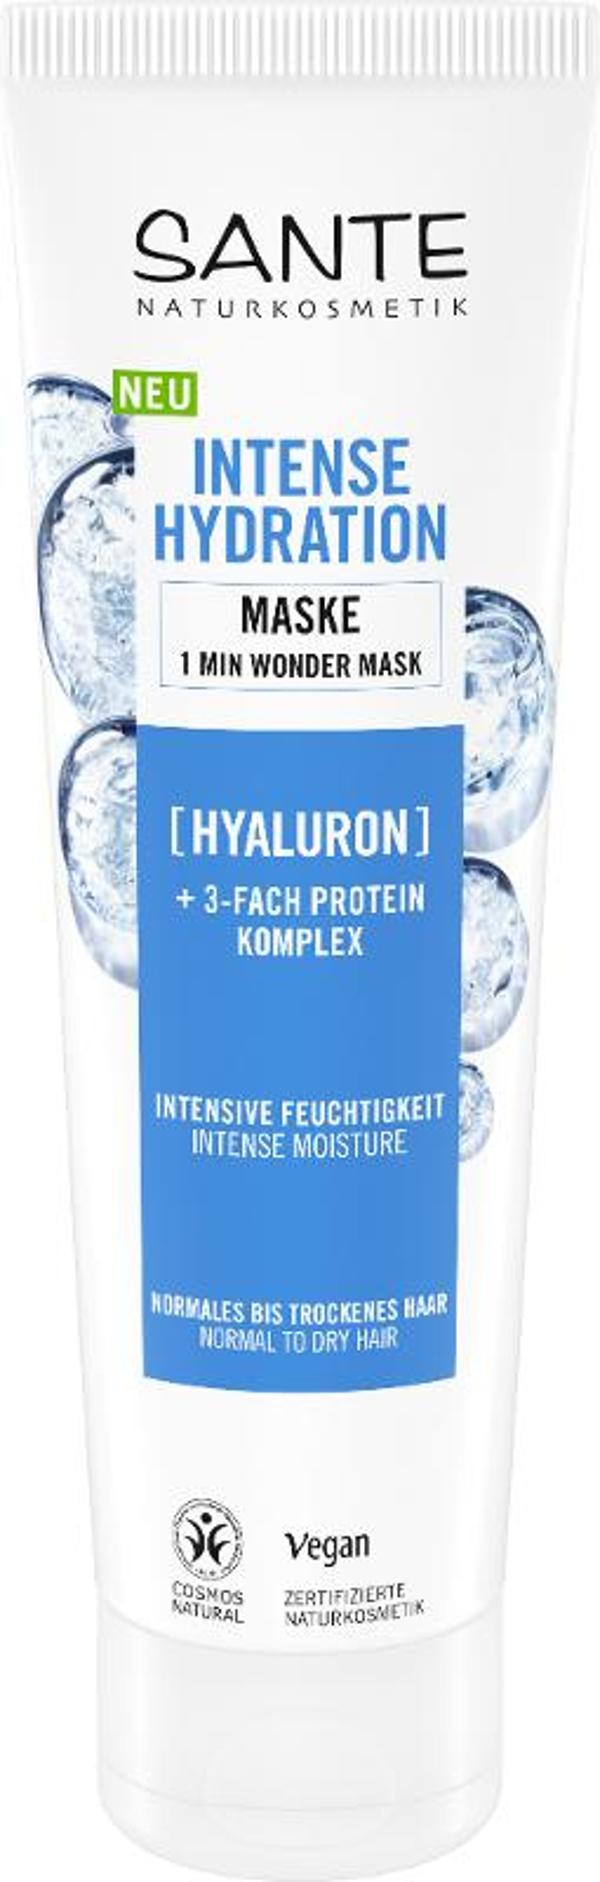 Produktfoto zu Intense Hydration Hyaloron Haarmaske 150ml Sante